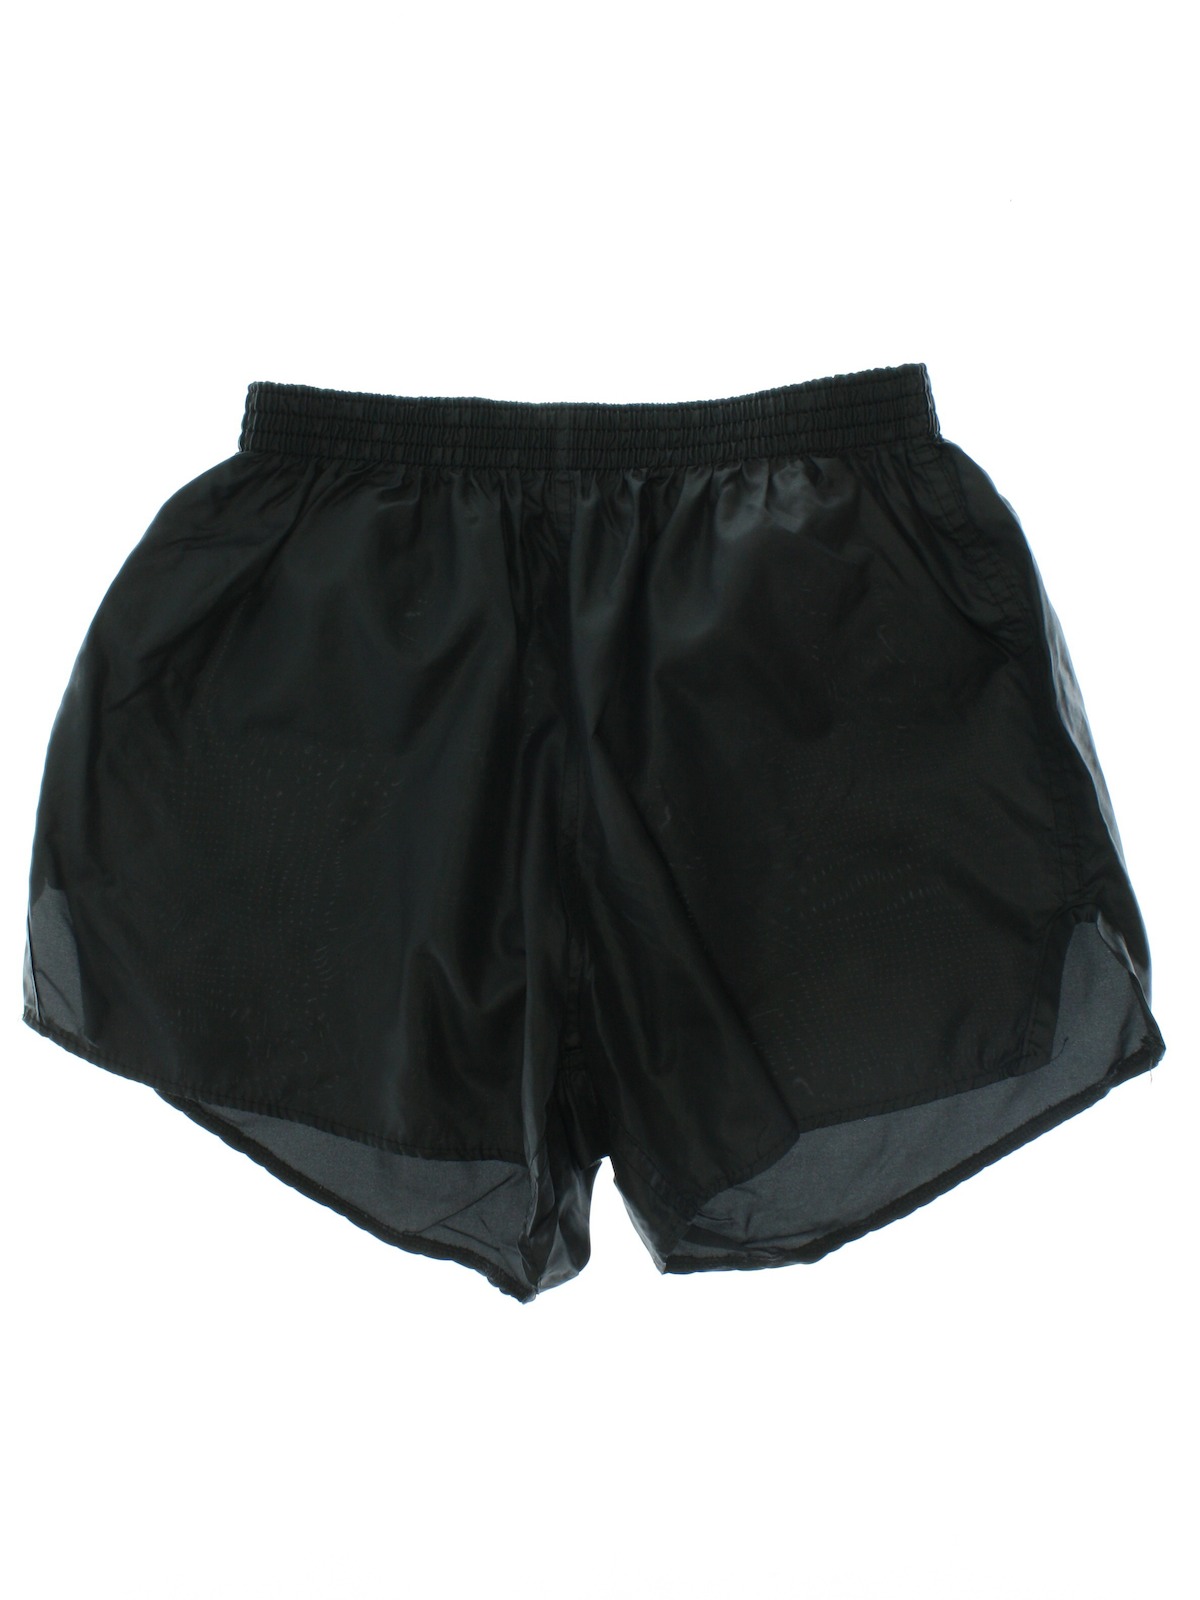 1980's Retro Shorts: 80s -Soffe- Mens black background nylon running ...